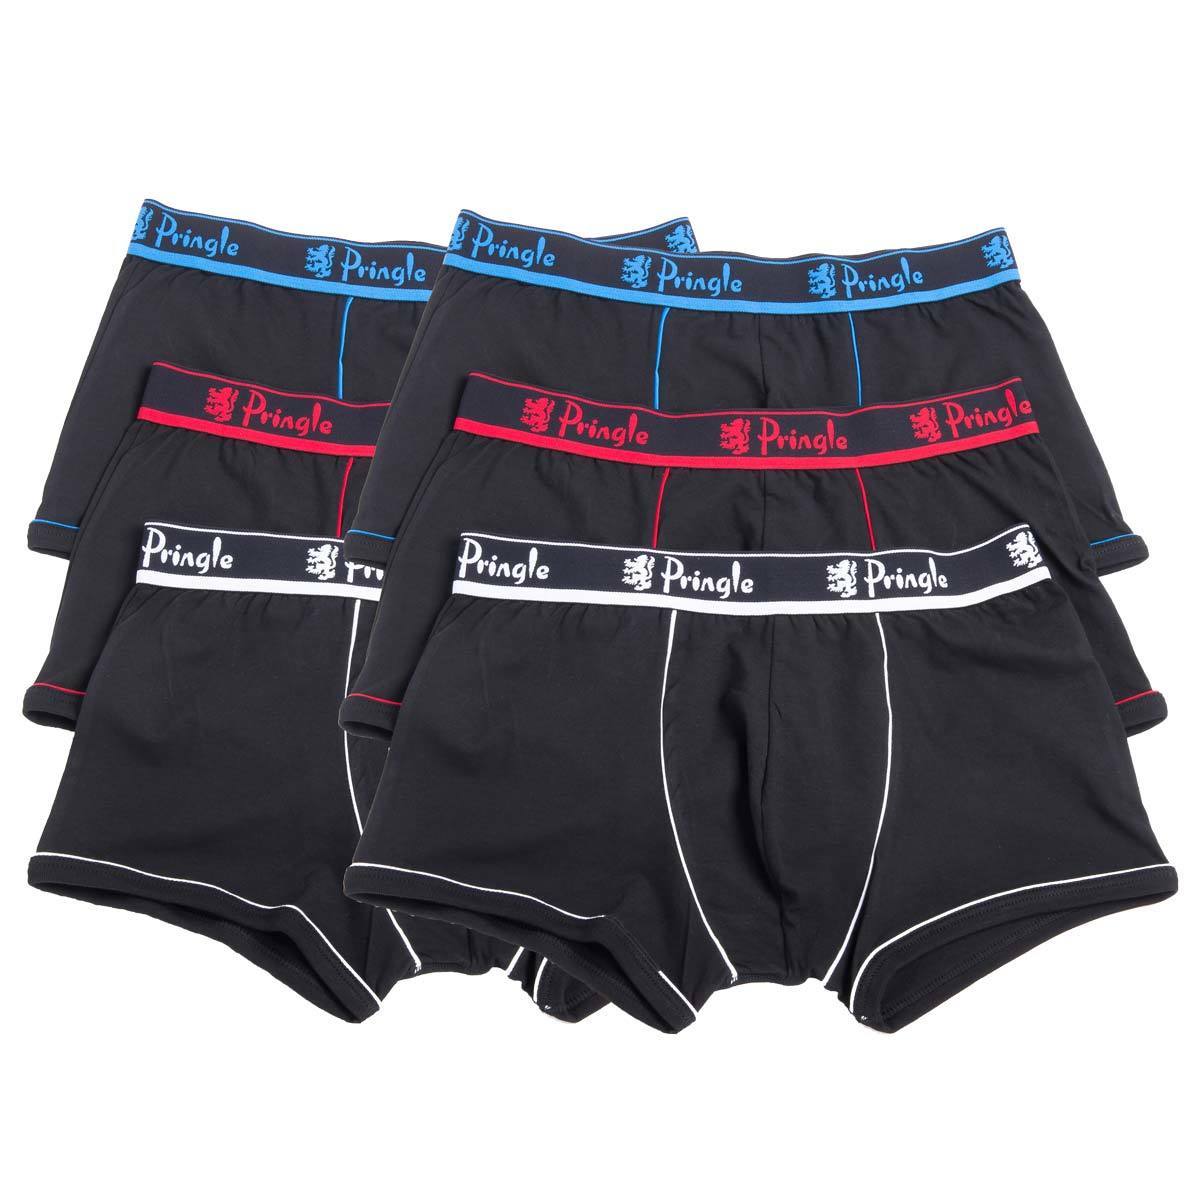 Pringle 2 x 3 - Pack Men's Edward Boxer Shorts in Black, Medium